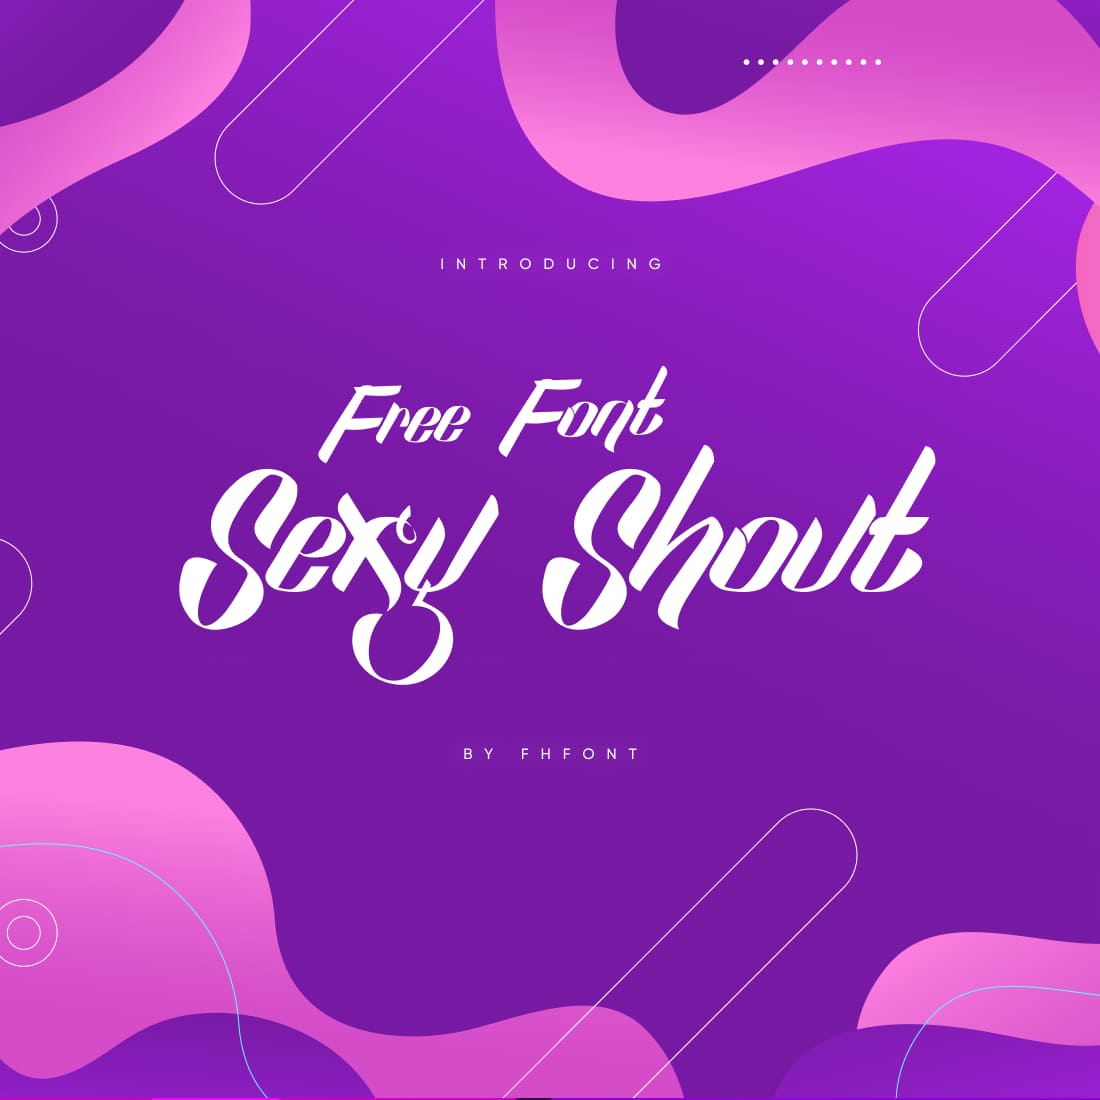 Sexy Shout Free Font Main Cover by MasterBundles.